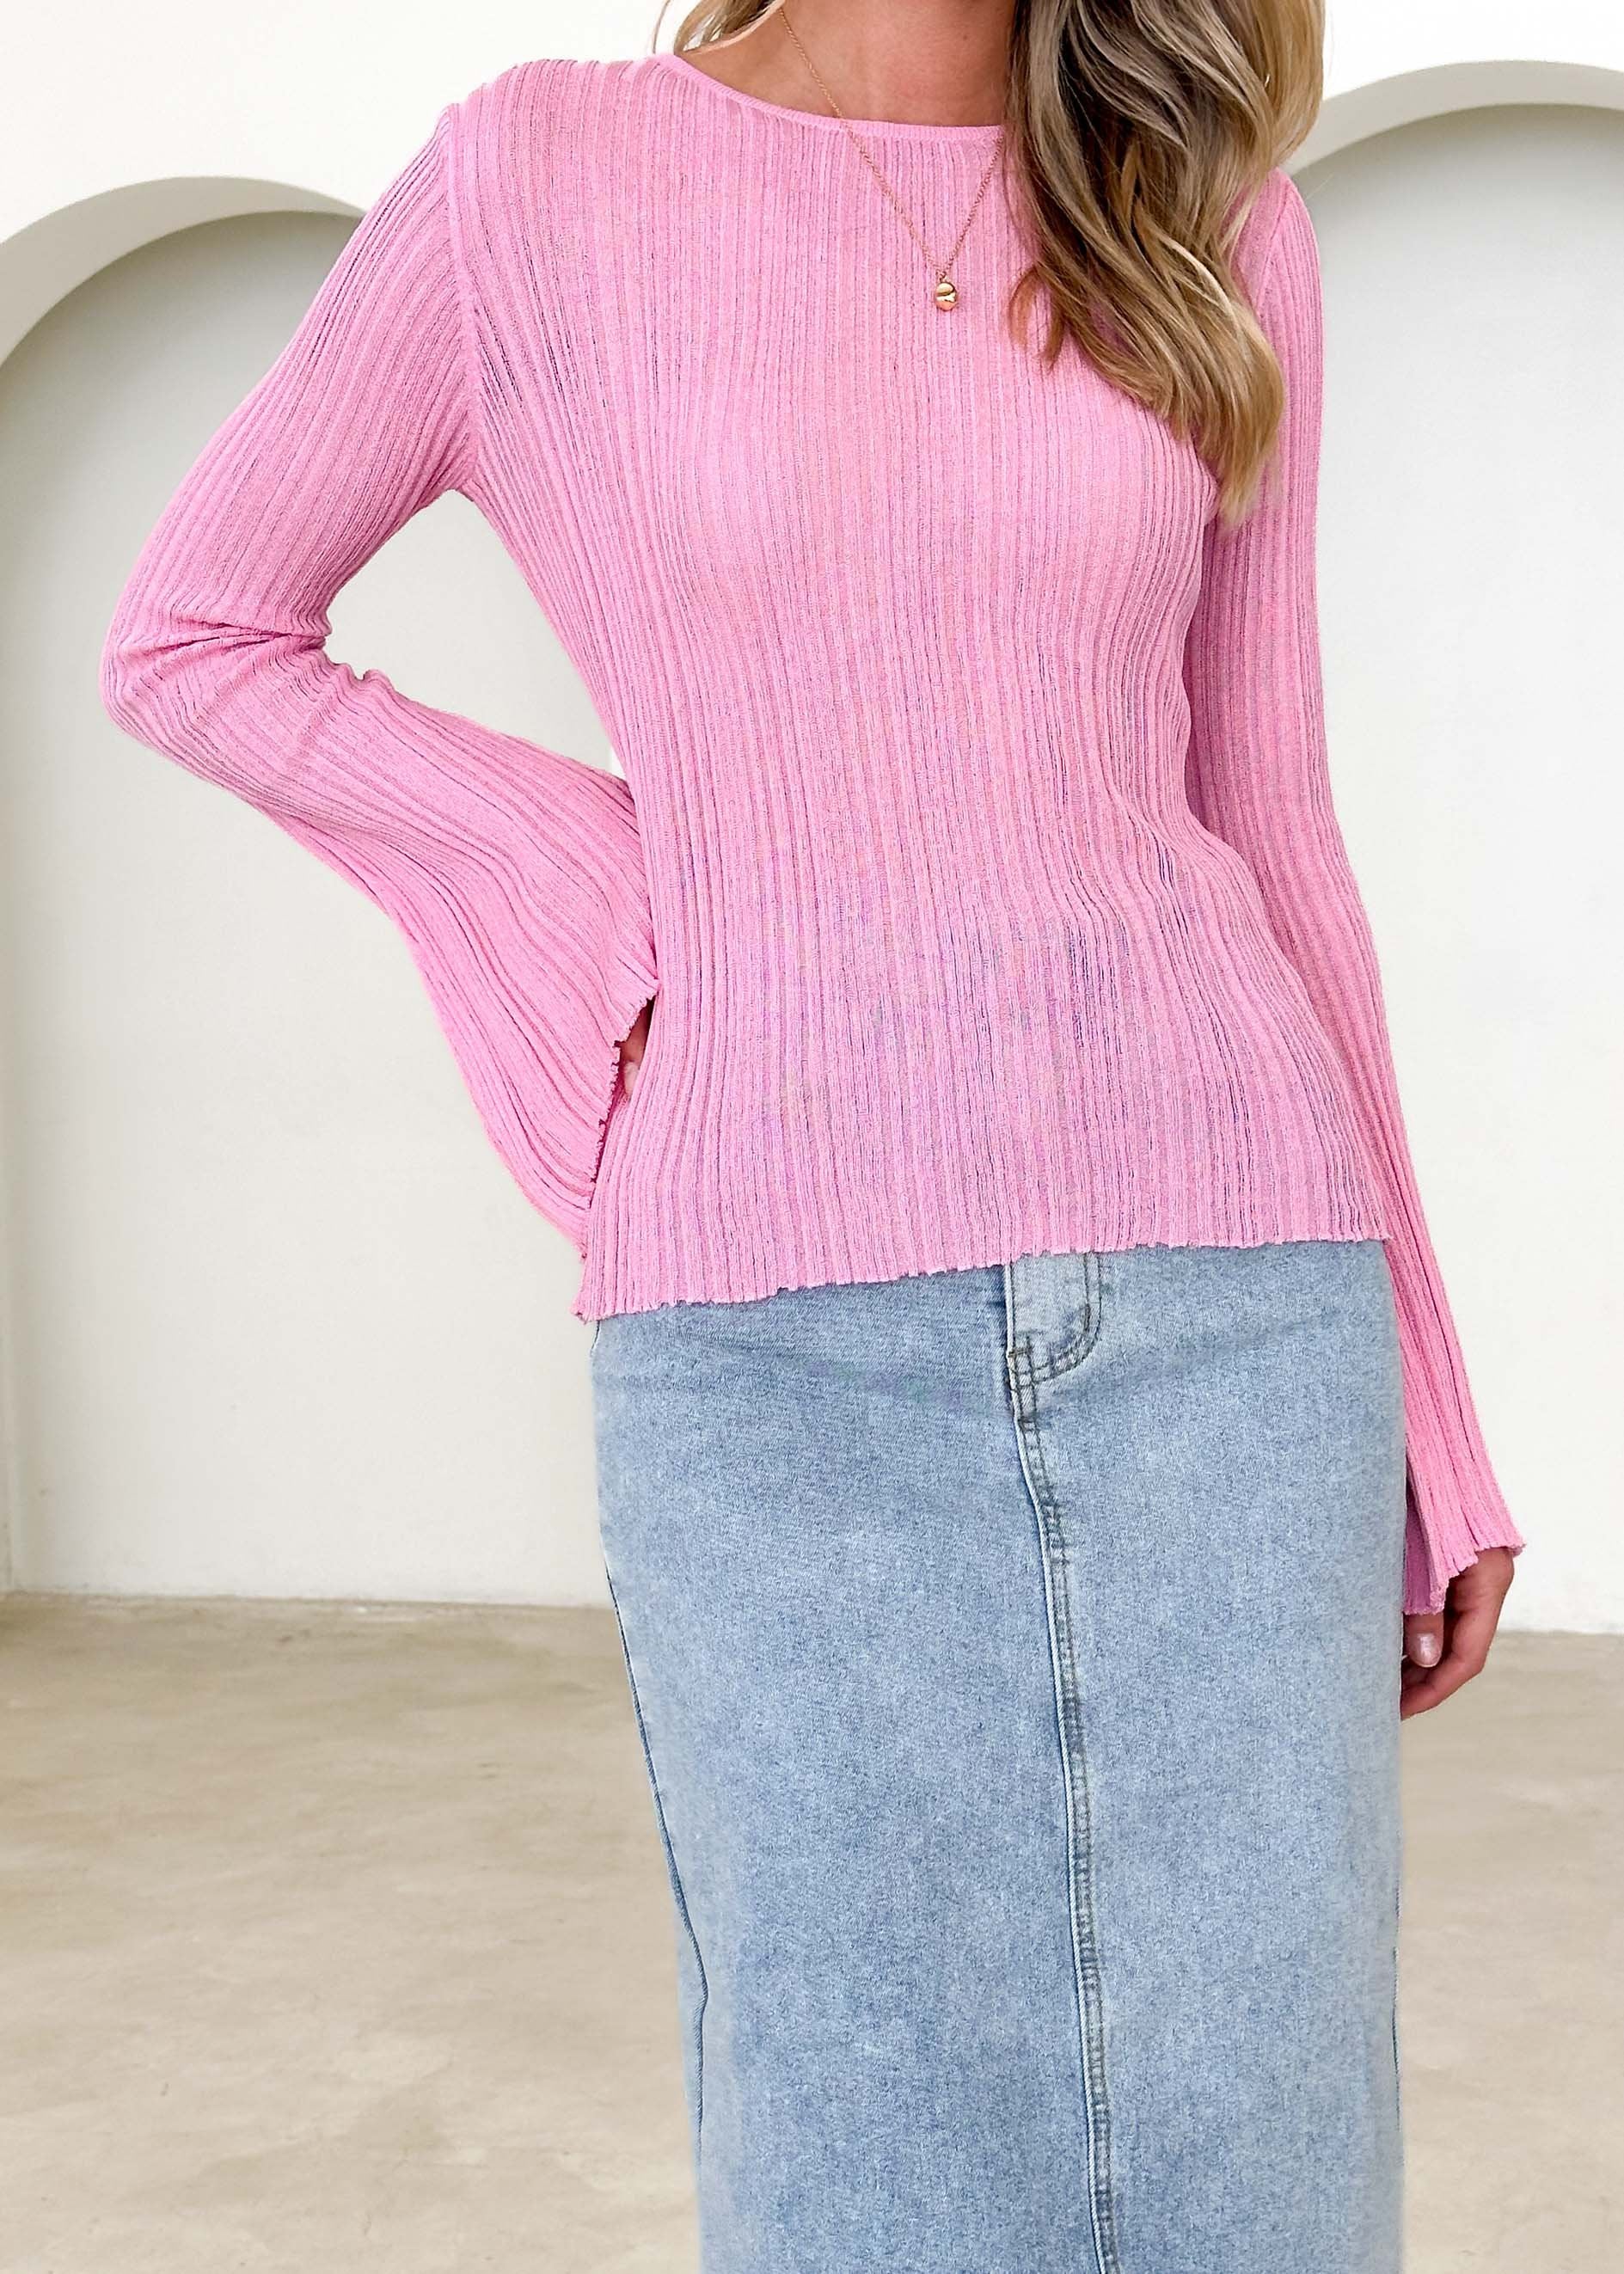 Trivina Knit Top - Pink